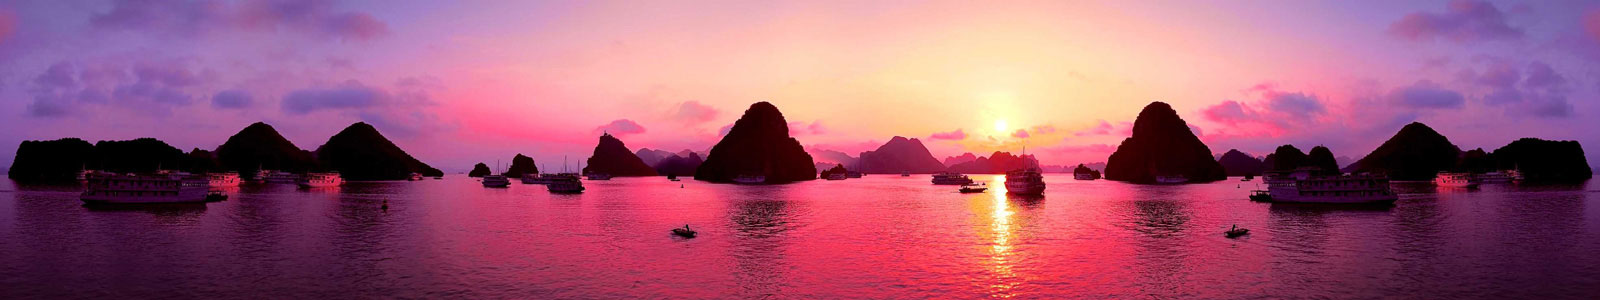 №6181 - Пурпурный закат в островках Вьетнама